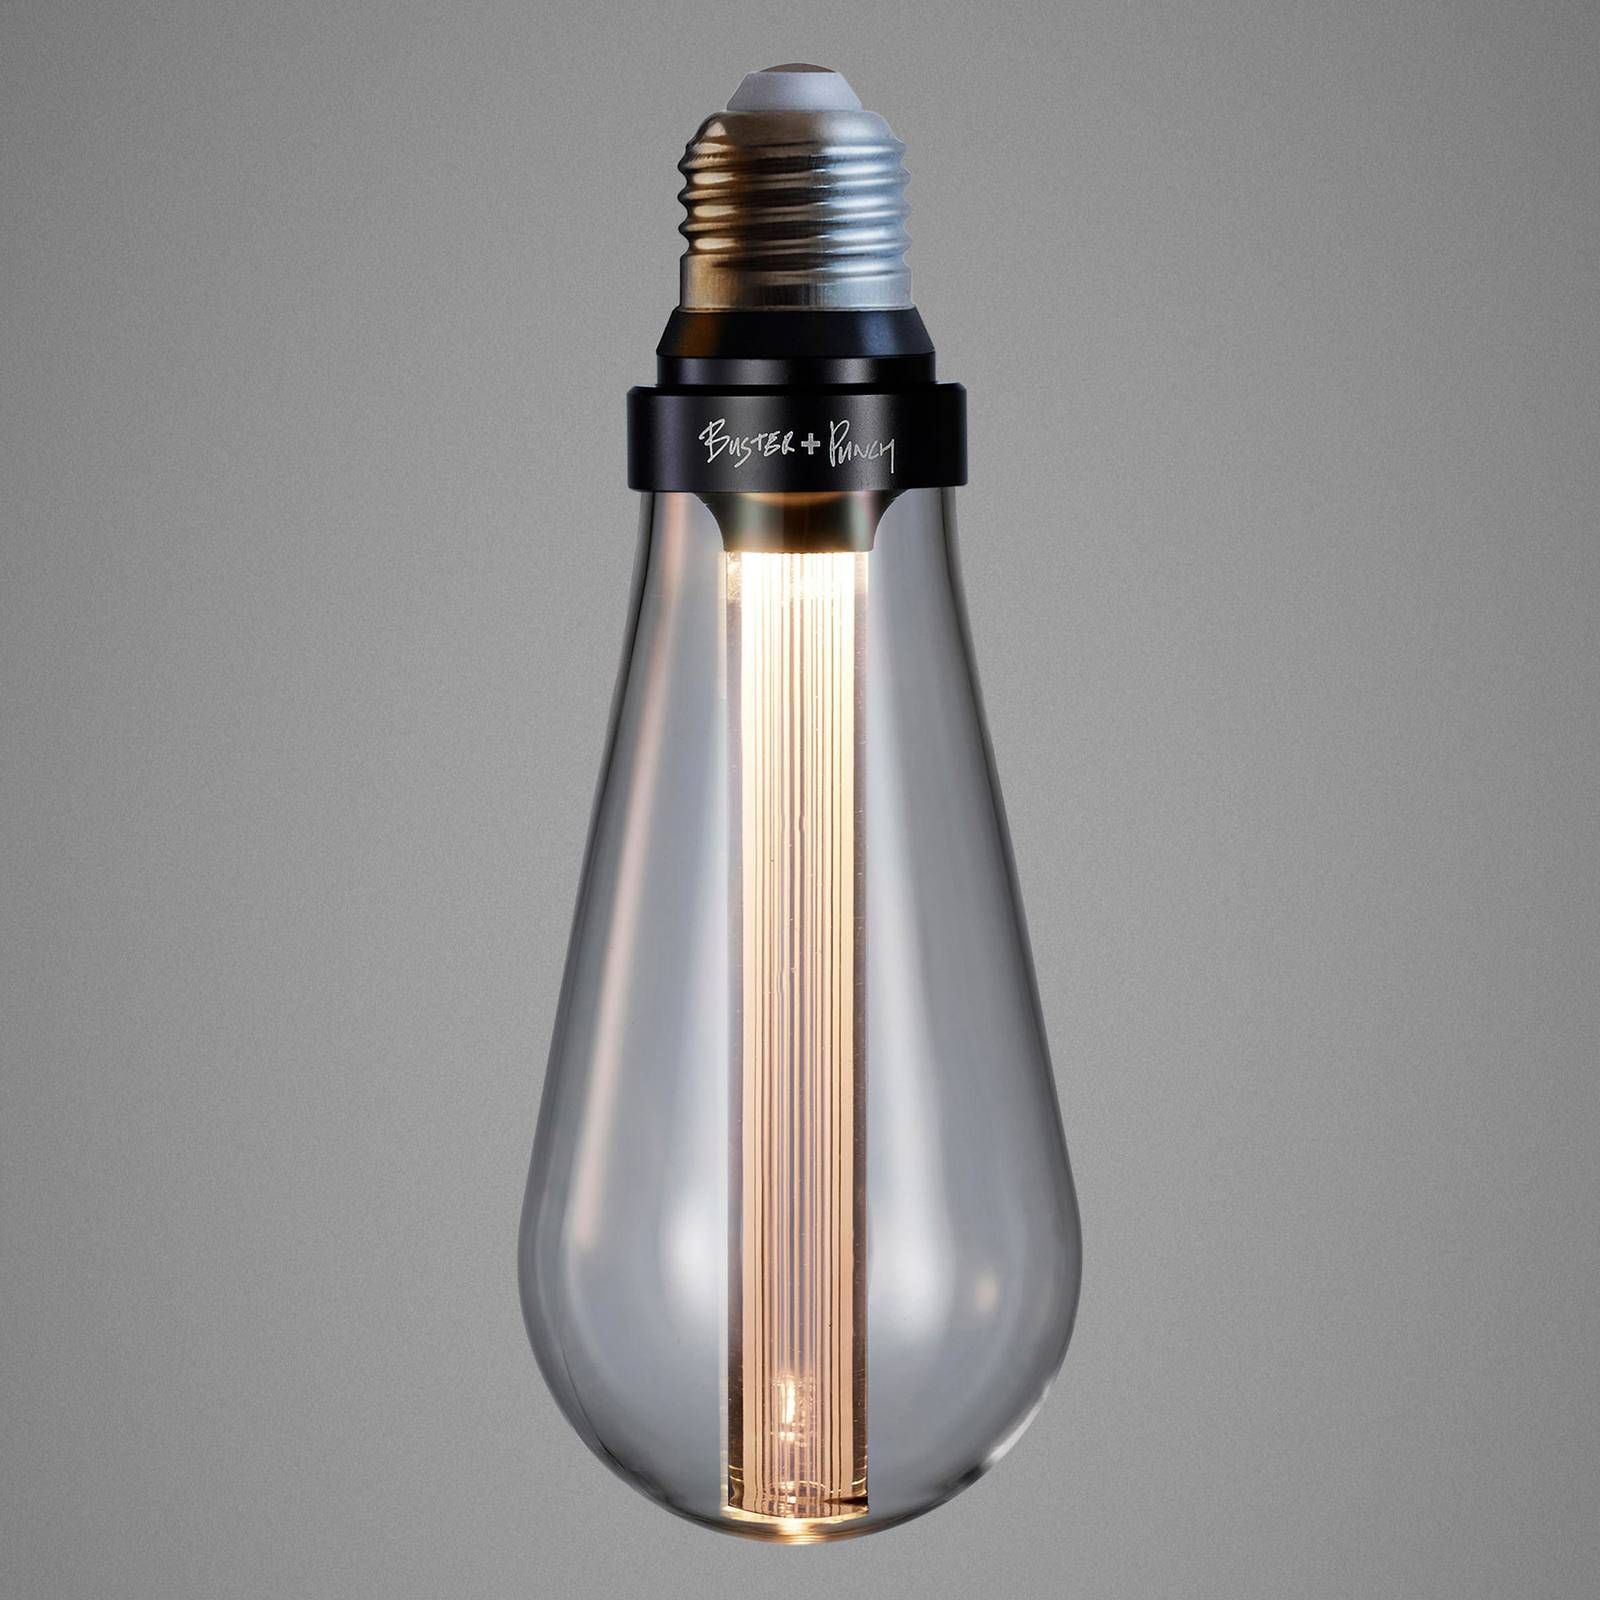 Buster + Punch LED E27 2W stmievateľná crystal, polykarbonát, E27, 2W, Energialuokka: G, P: 17 cm